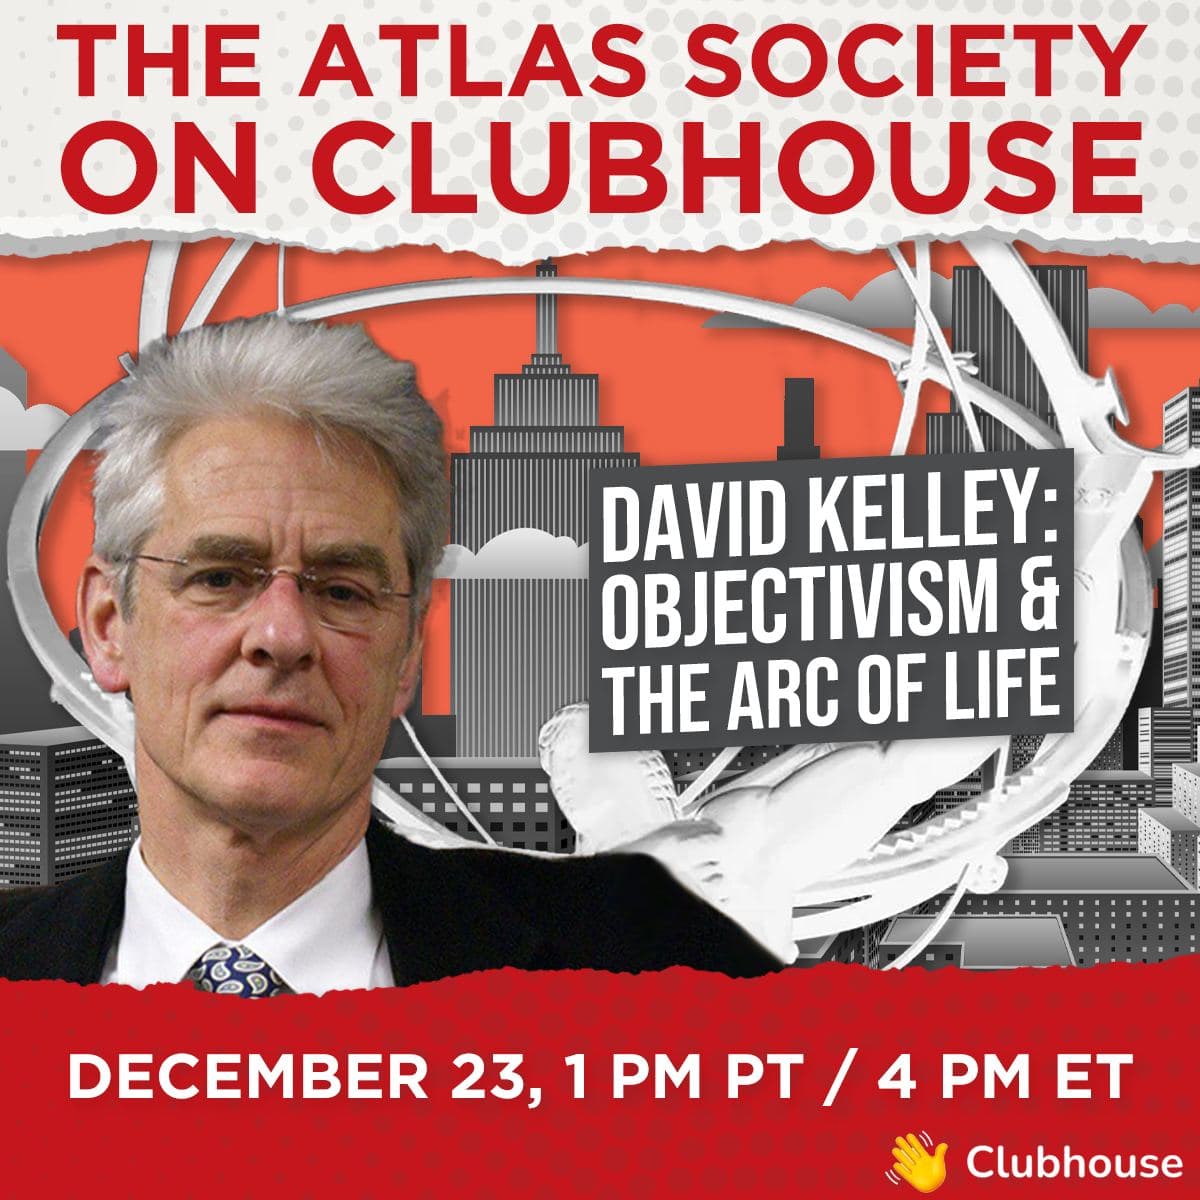 David Kelley - Objectivism & The Arc of Life